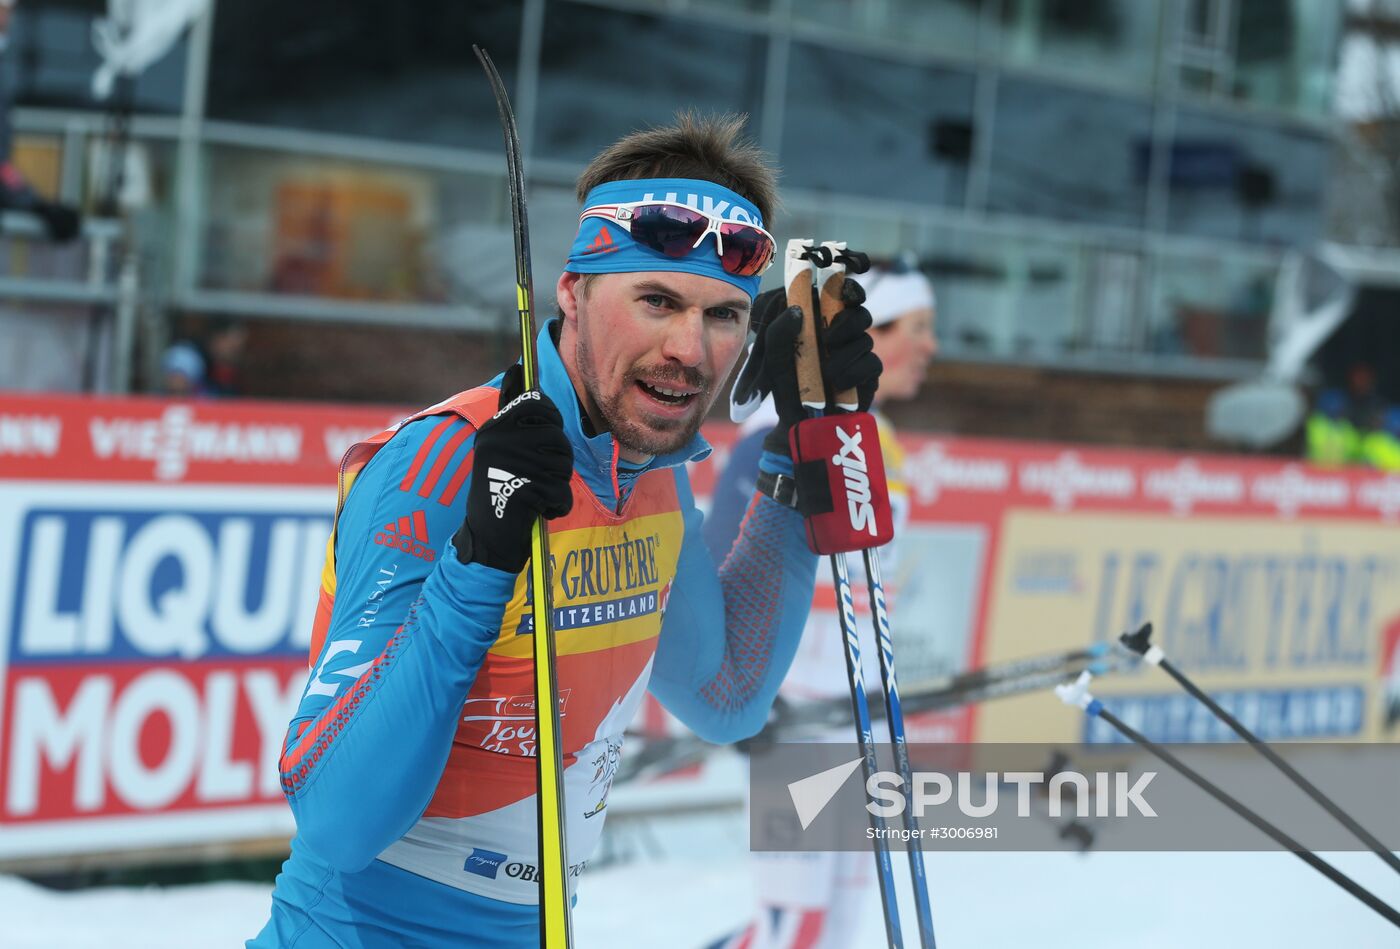 Sergei Ustyugov wins fifth Tour de Ski event in a row